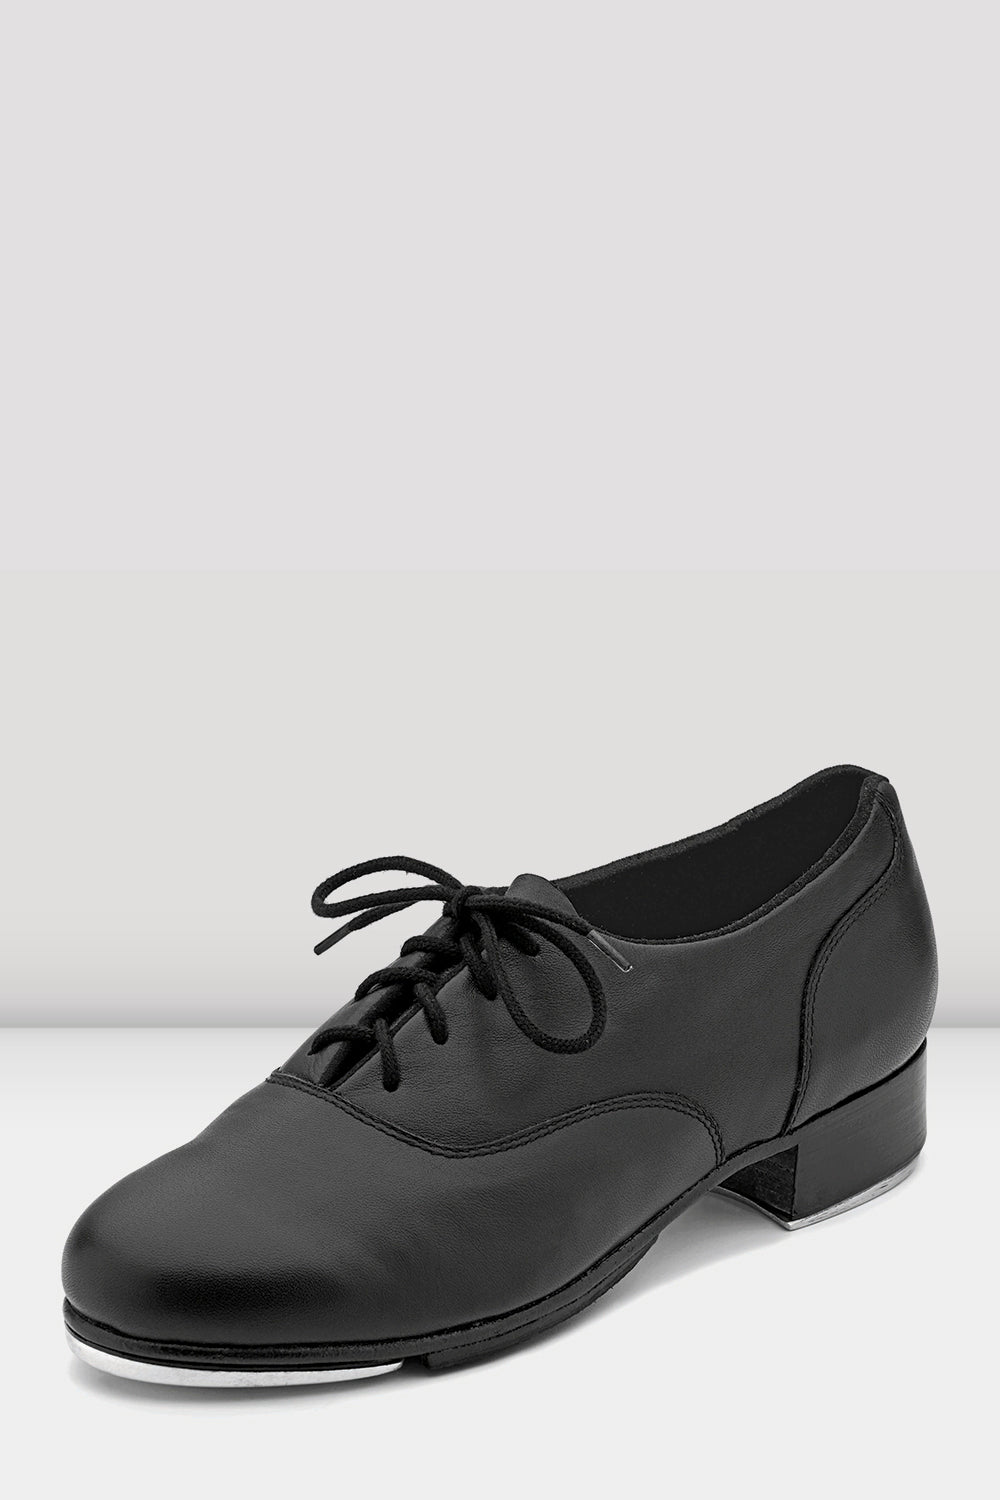 Ladies Respect Leather Tap Shoes, Black 